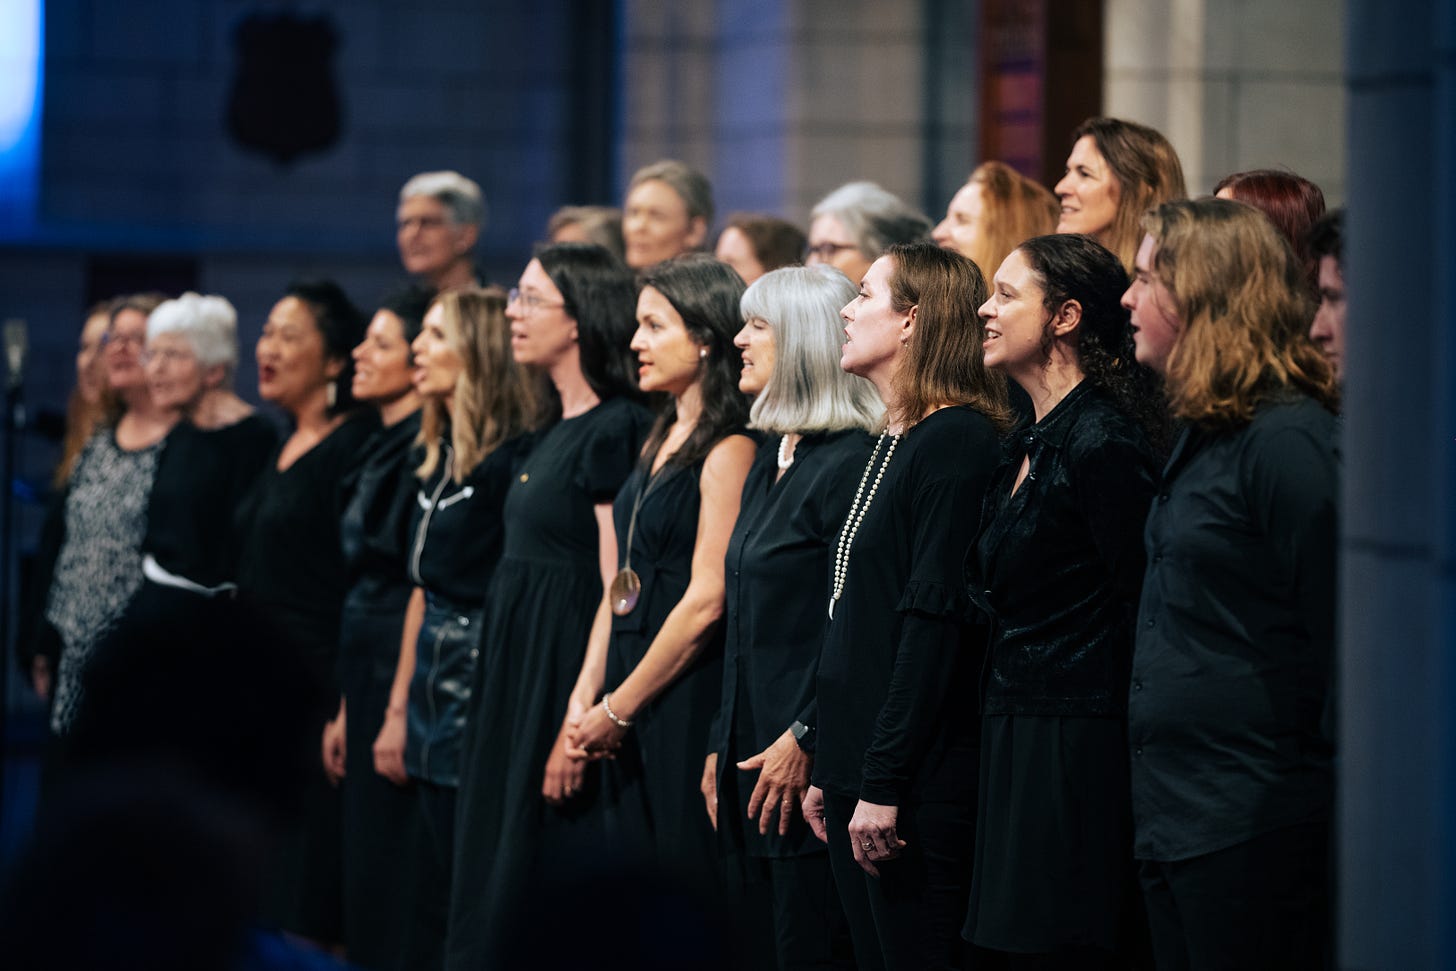 The Stimmung Choir singing all dressed in black